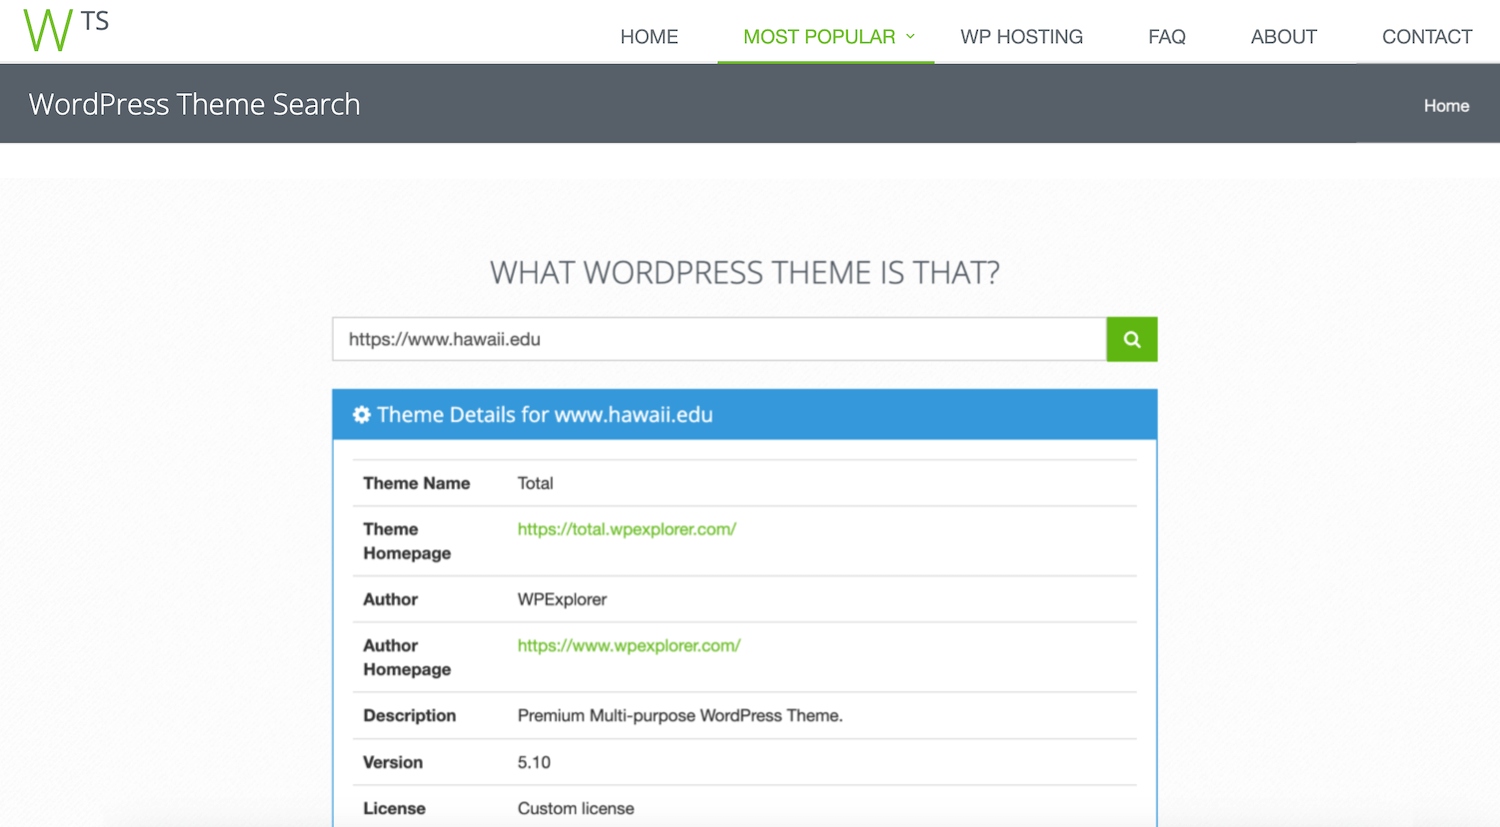 What WordPress Theme Is That